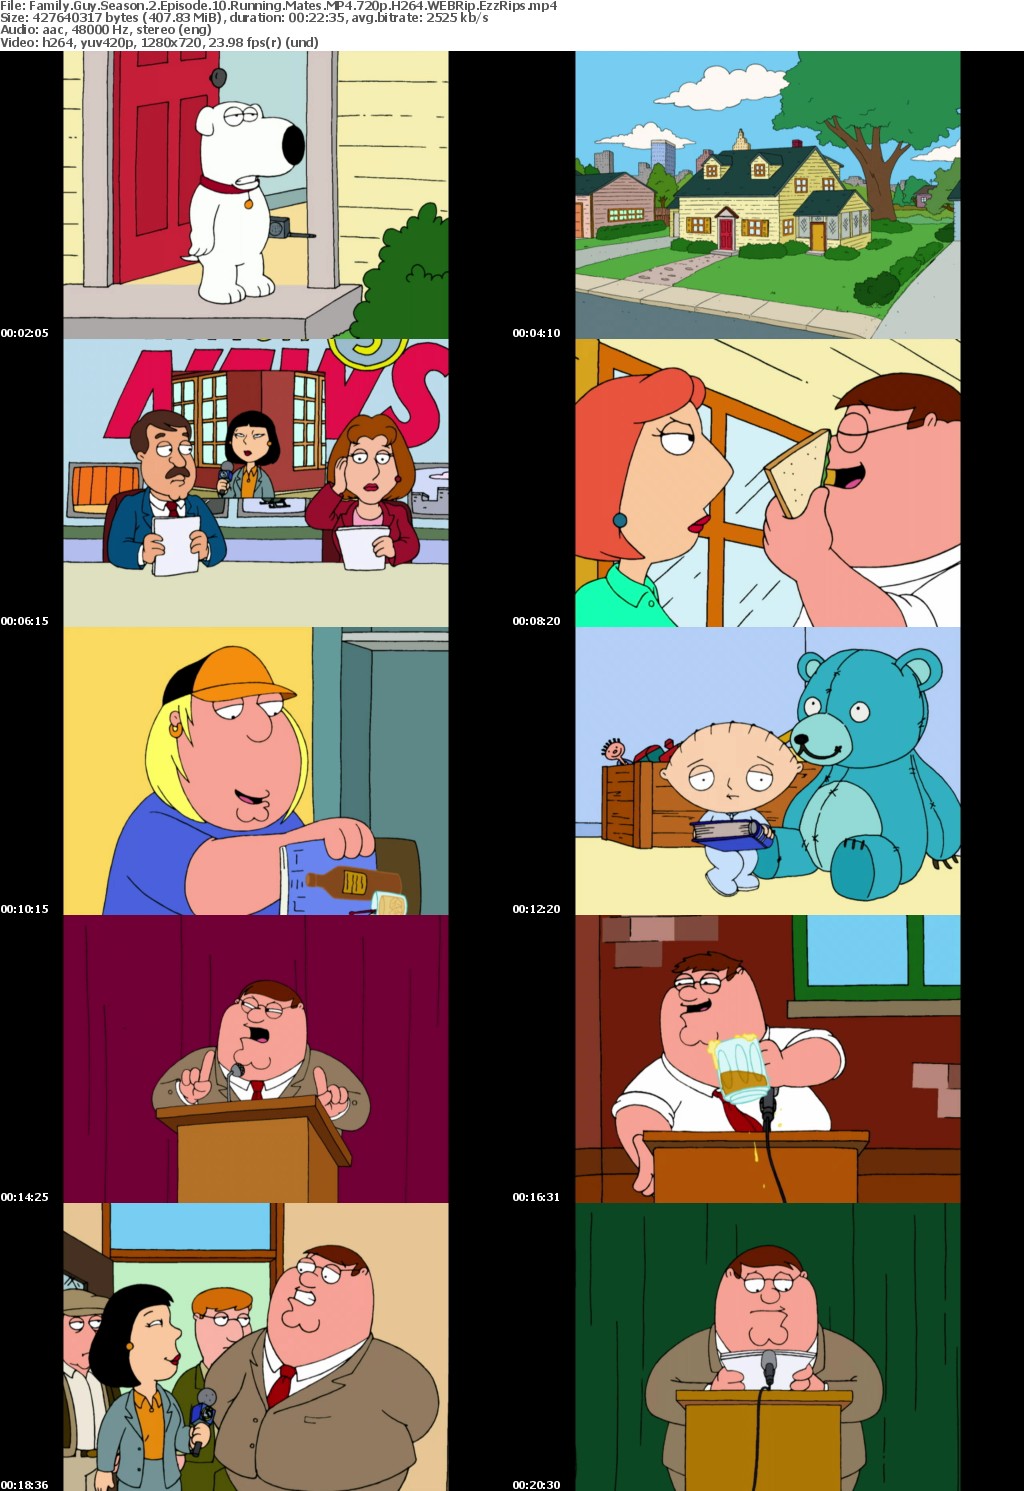 Family Guy Season 2 Episode 10 Running Mates MP4 720p H264 WEBRip EzzRips